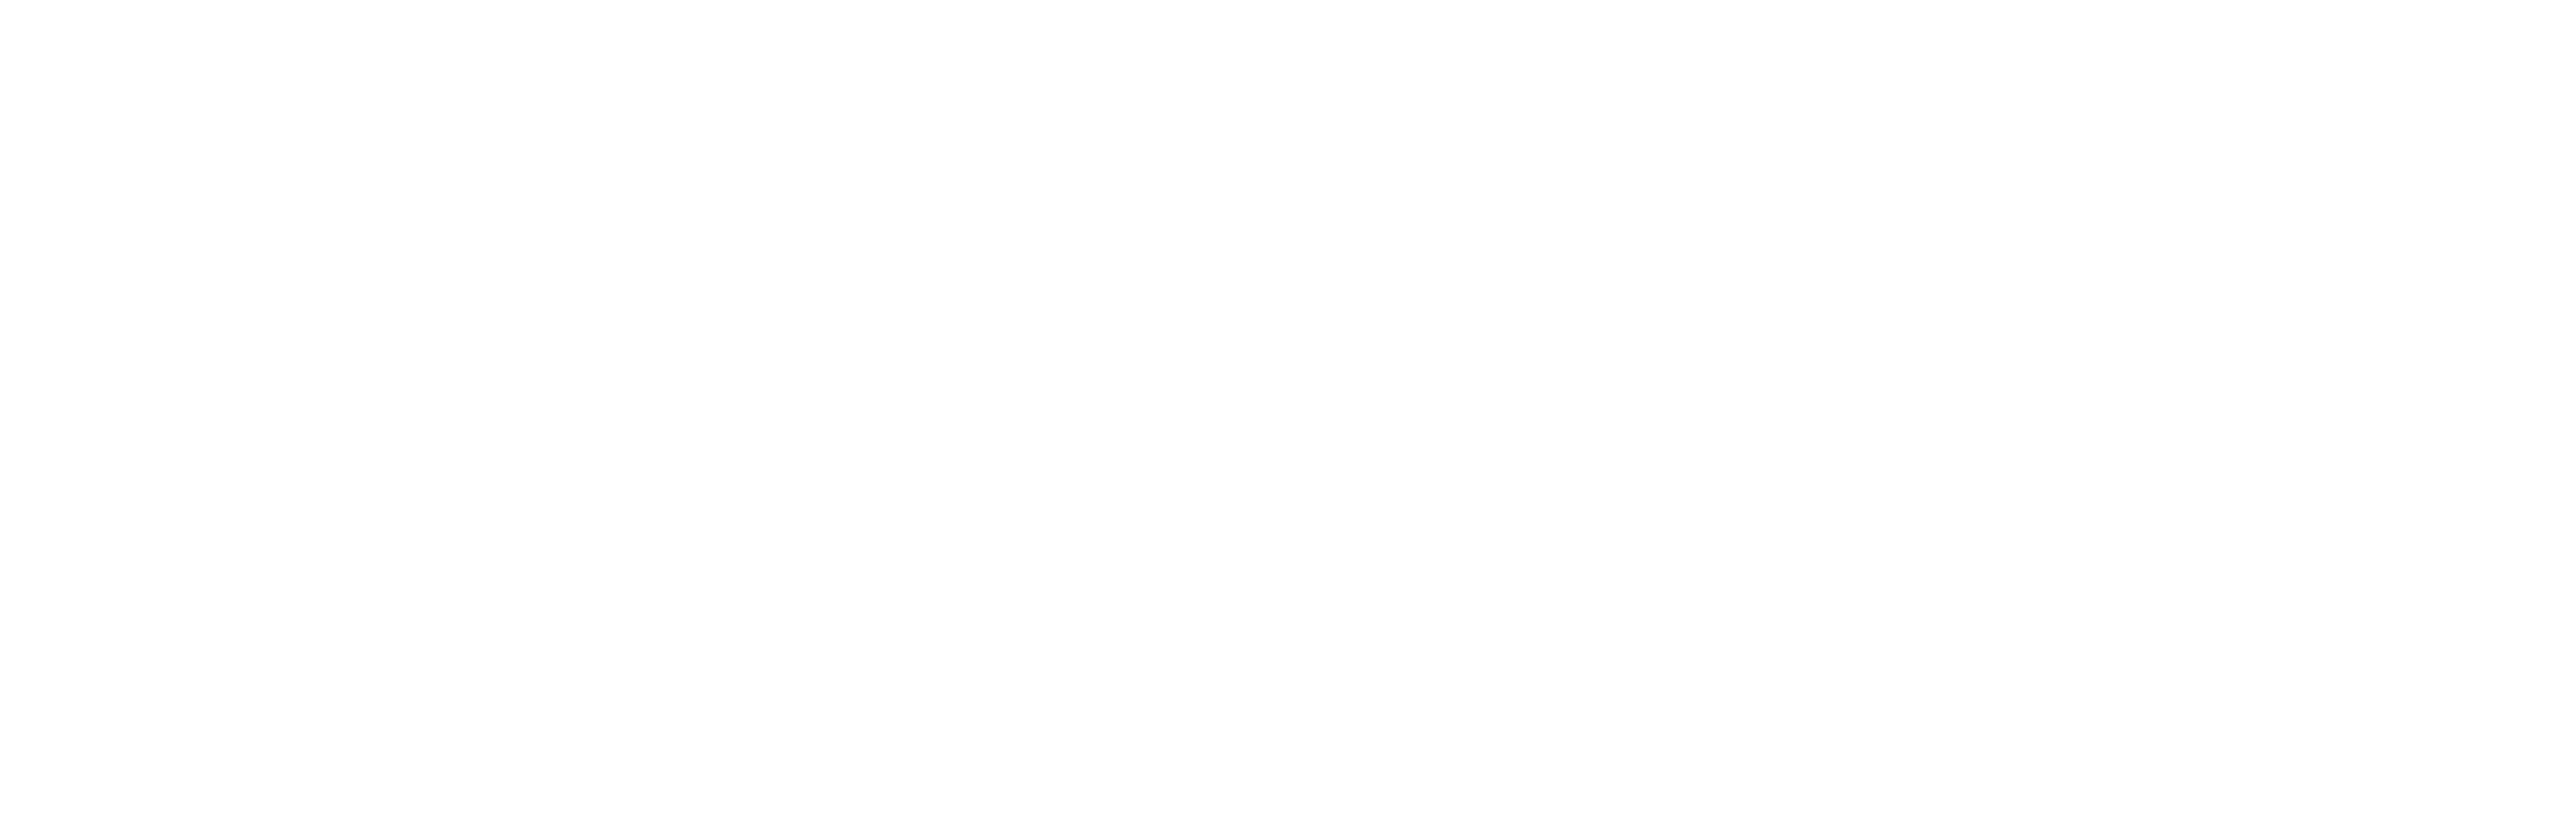 networx by iris white header logo